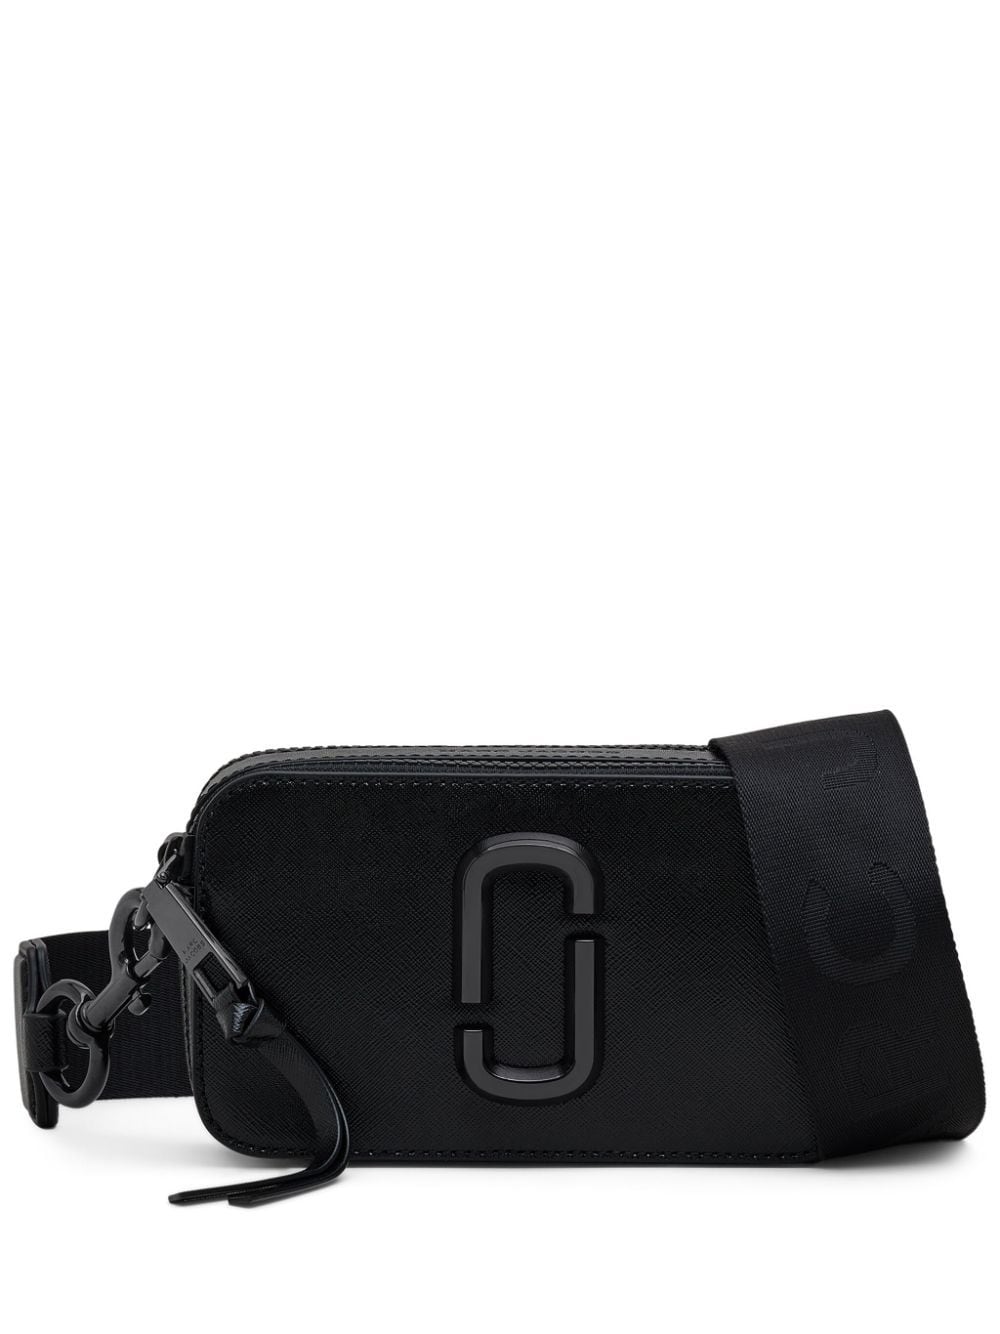 NWT Genuine Marc Jacobs Snapshot Small Camera Bag India